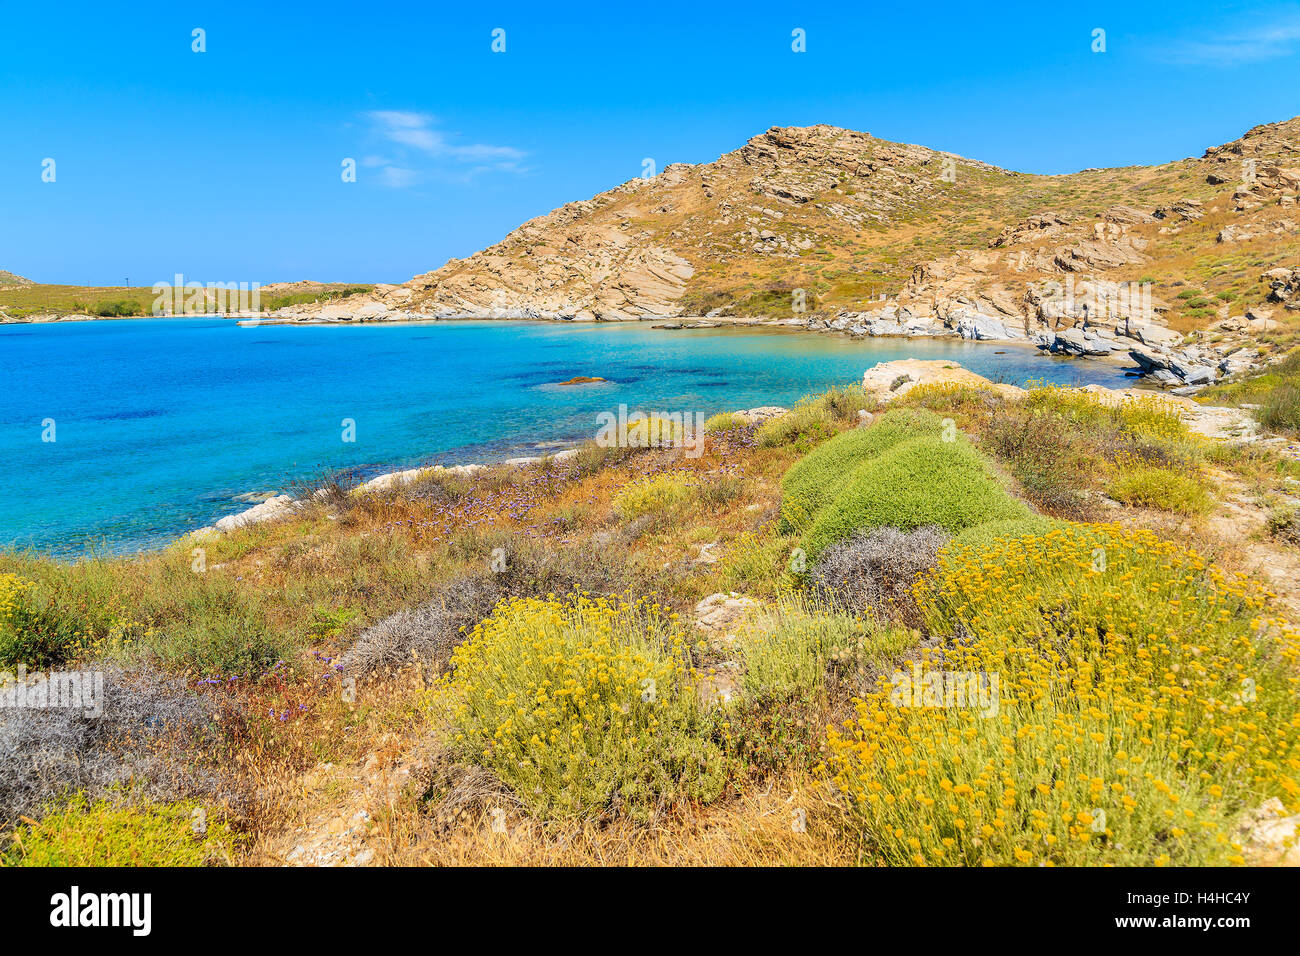 A view of beautiful Monastiri bay with turquoise sea water, Paros island, Greece Stock Photo